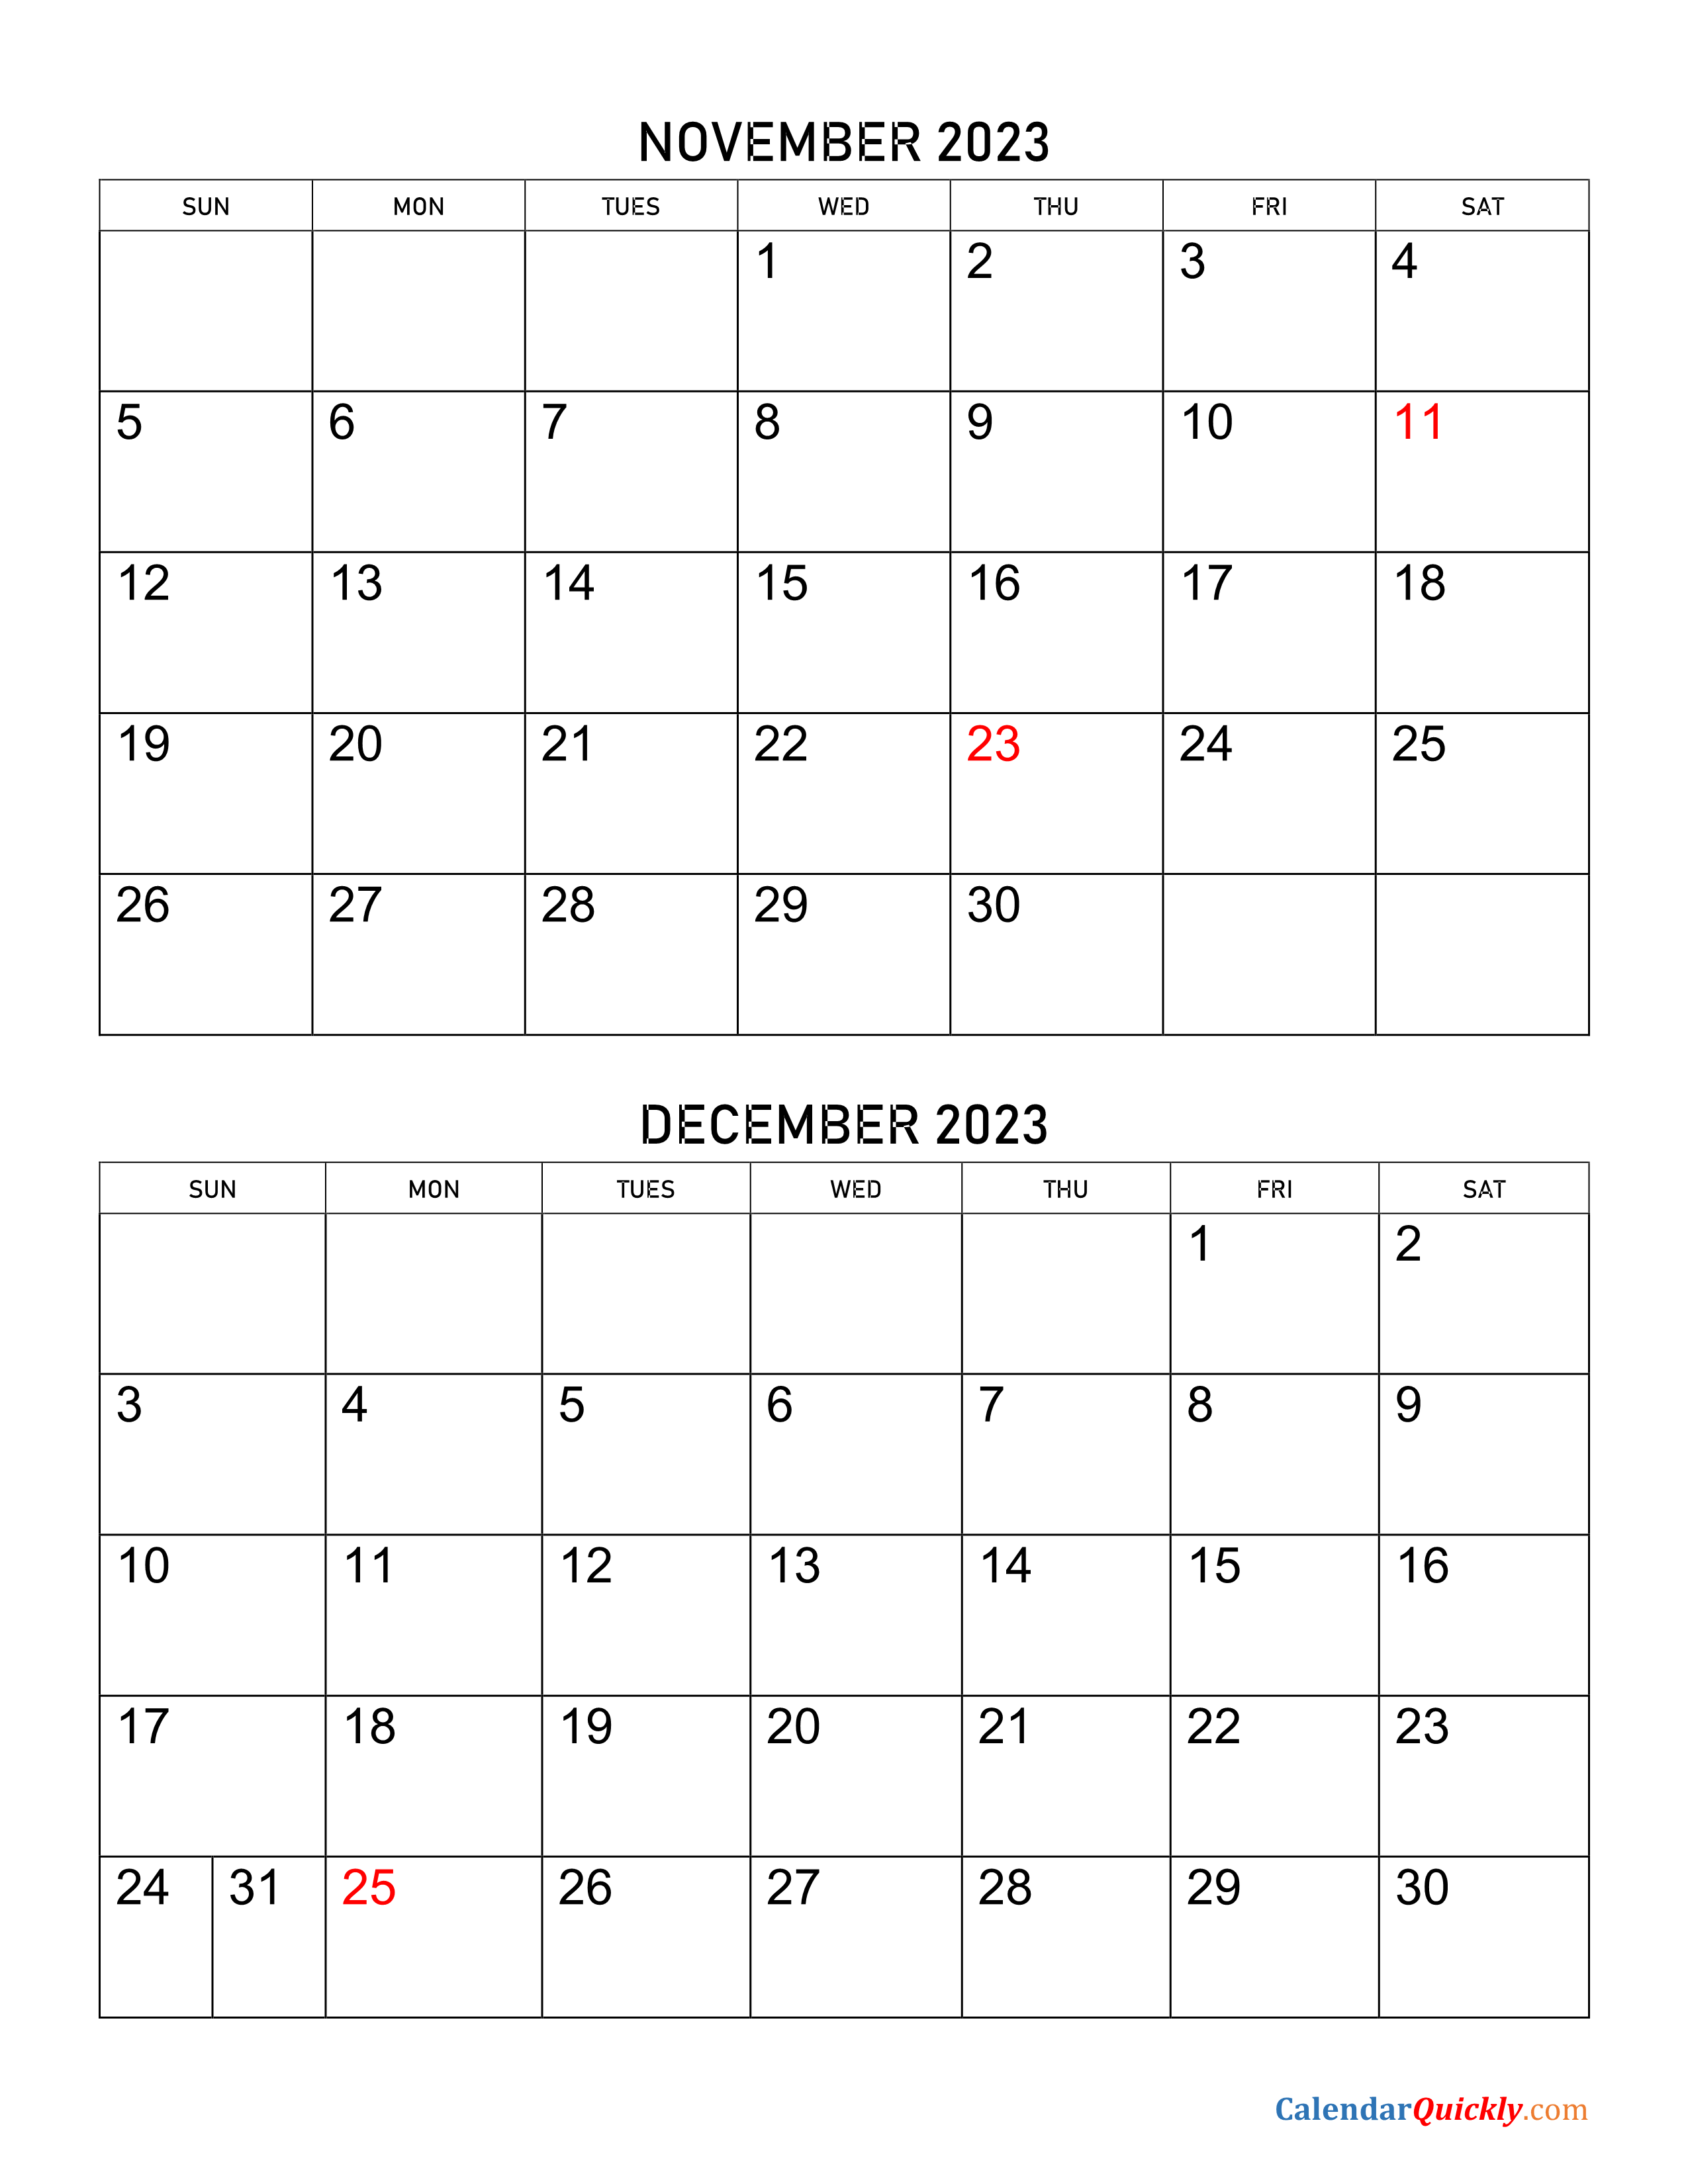 November and December 2023 Calendar Calendar Quickly